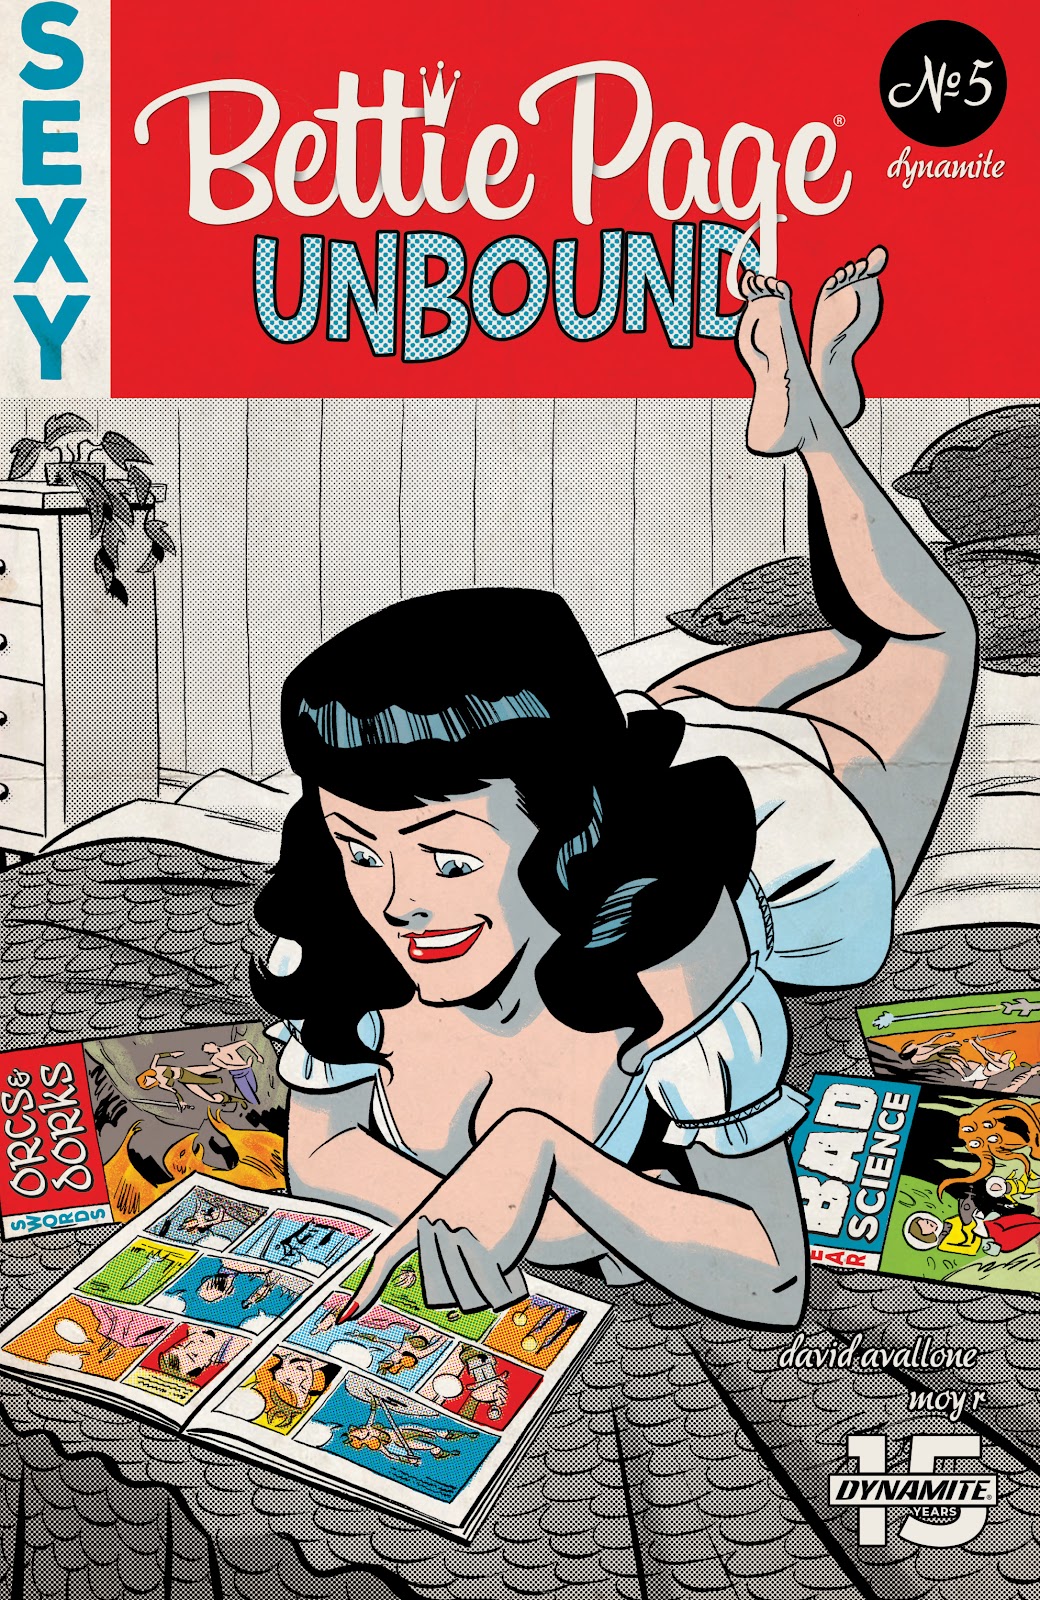 Bettie Page: Unbound issue 5 - Page 2